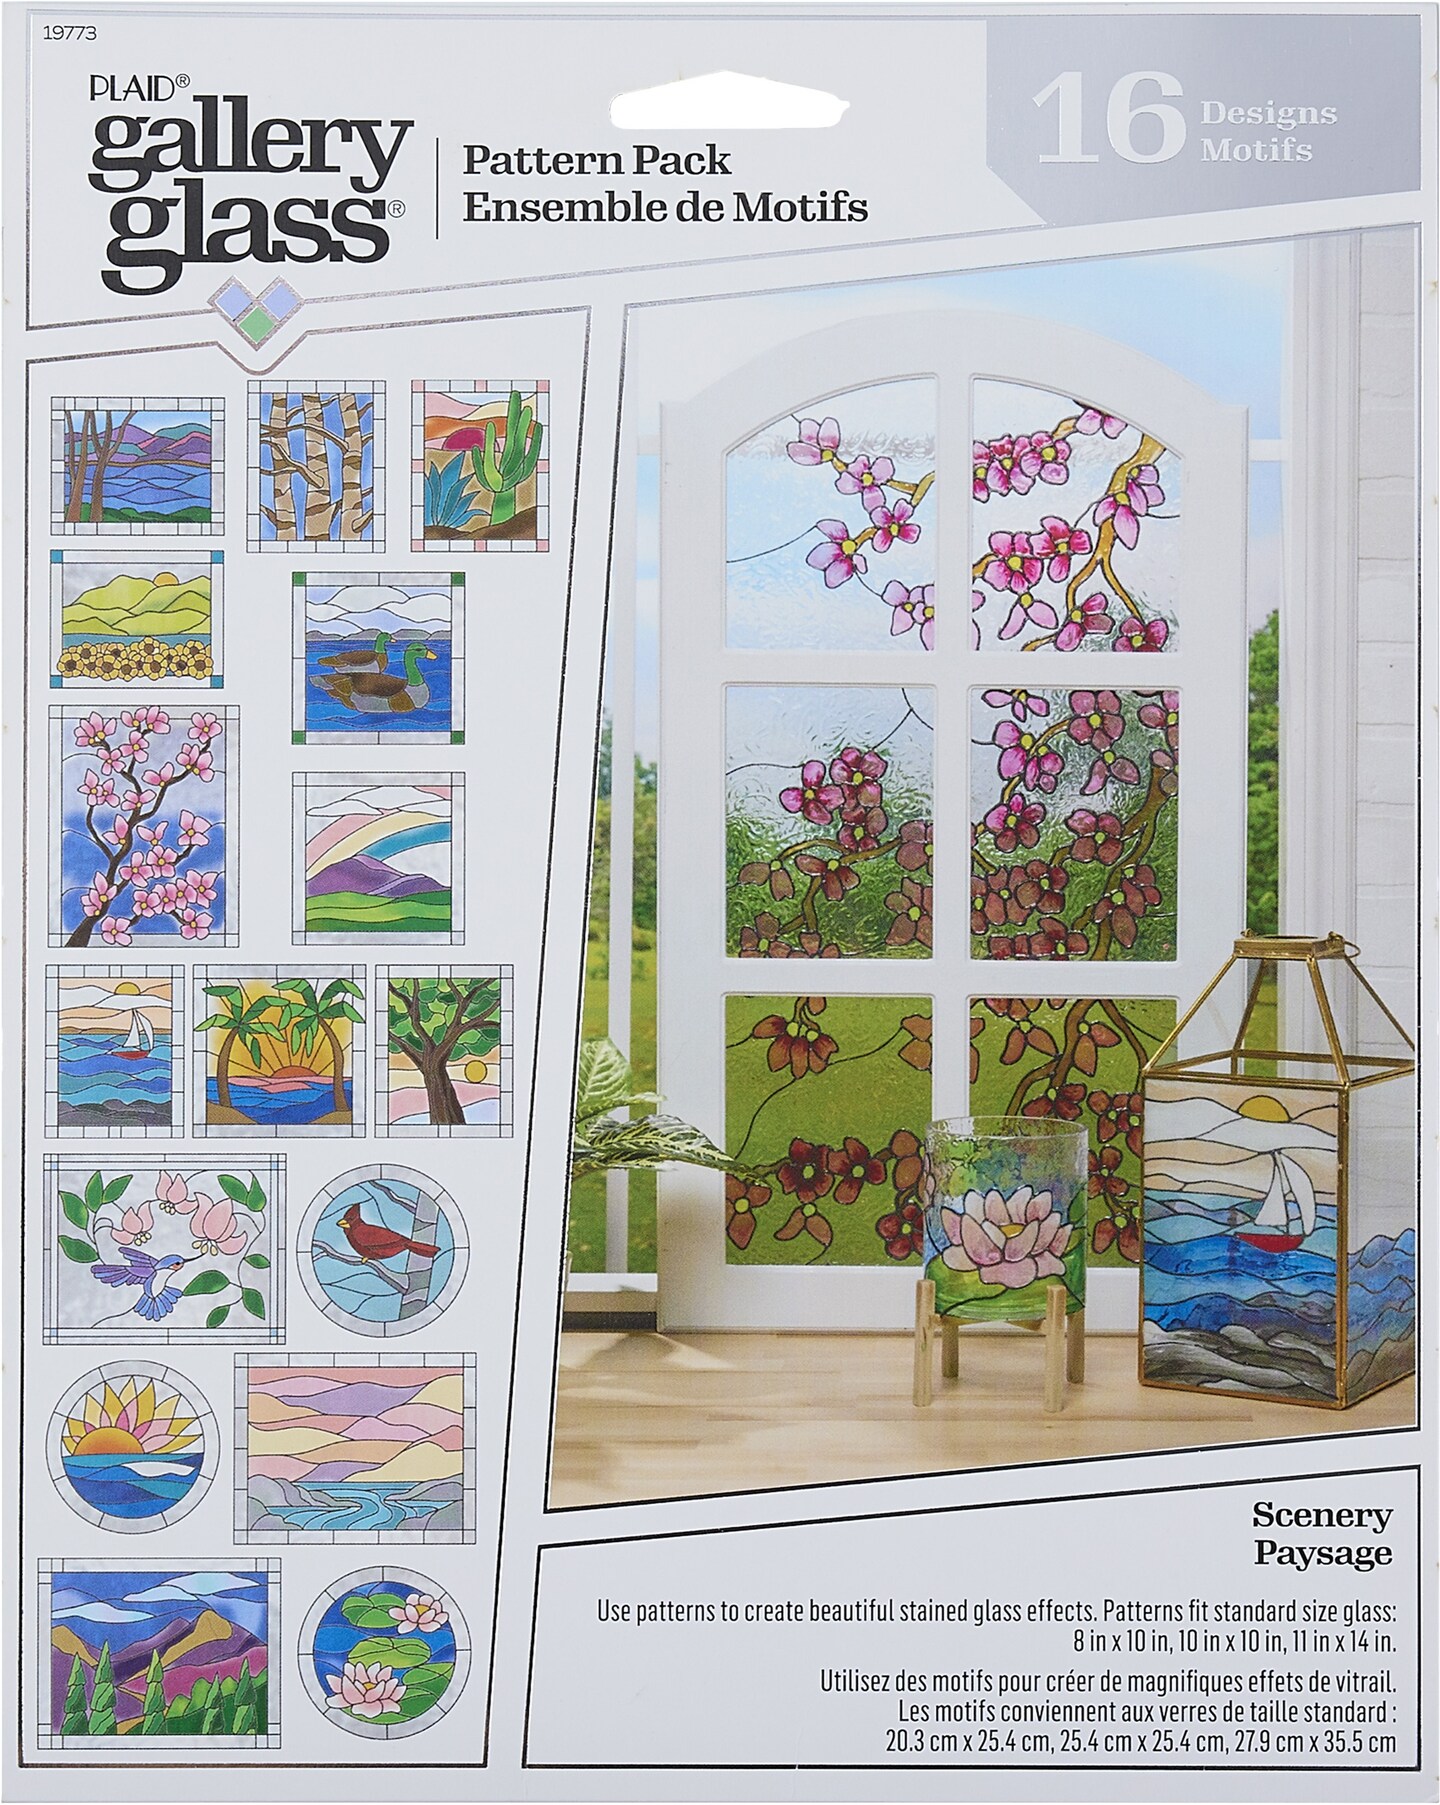 Plaid Basic Gallery Glass Paint Set